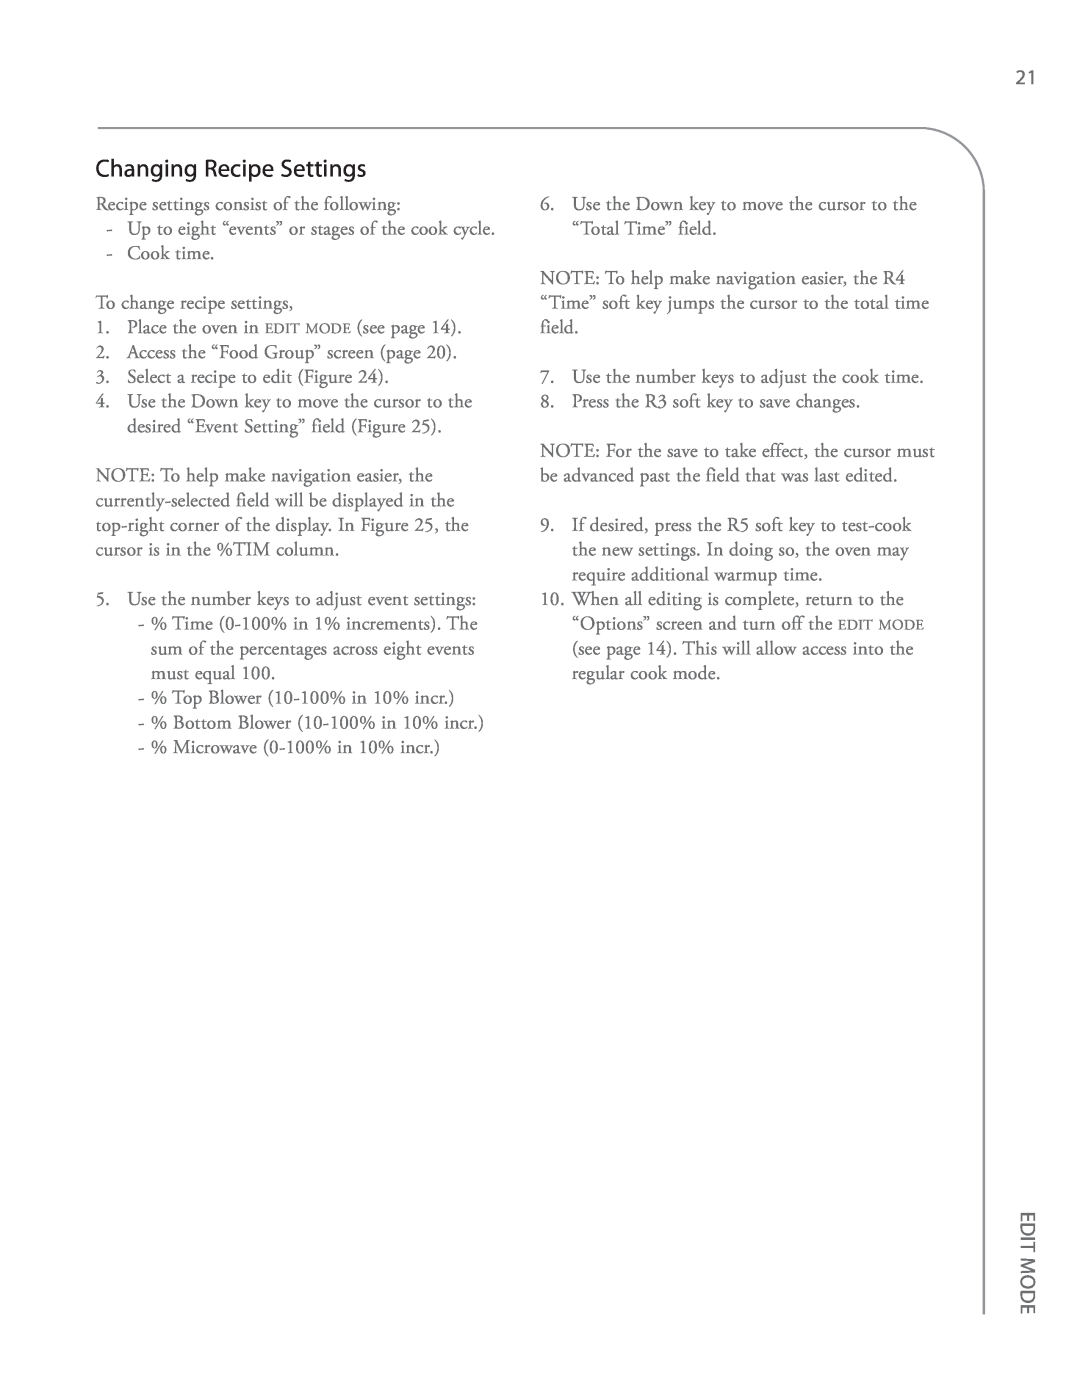 Turbo Chef Technologies i5 service manual Changing Recipe Settings, Edit Mode 